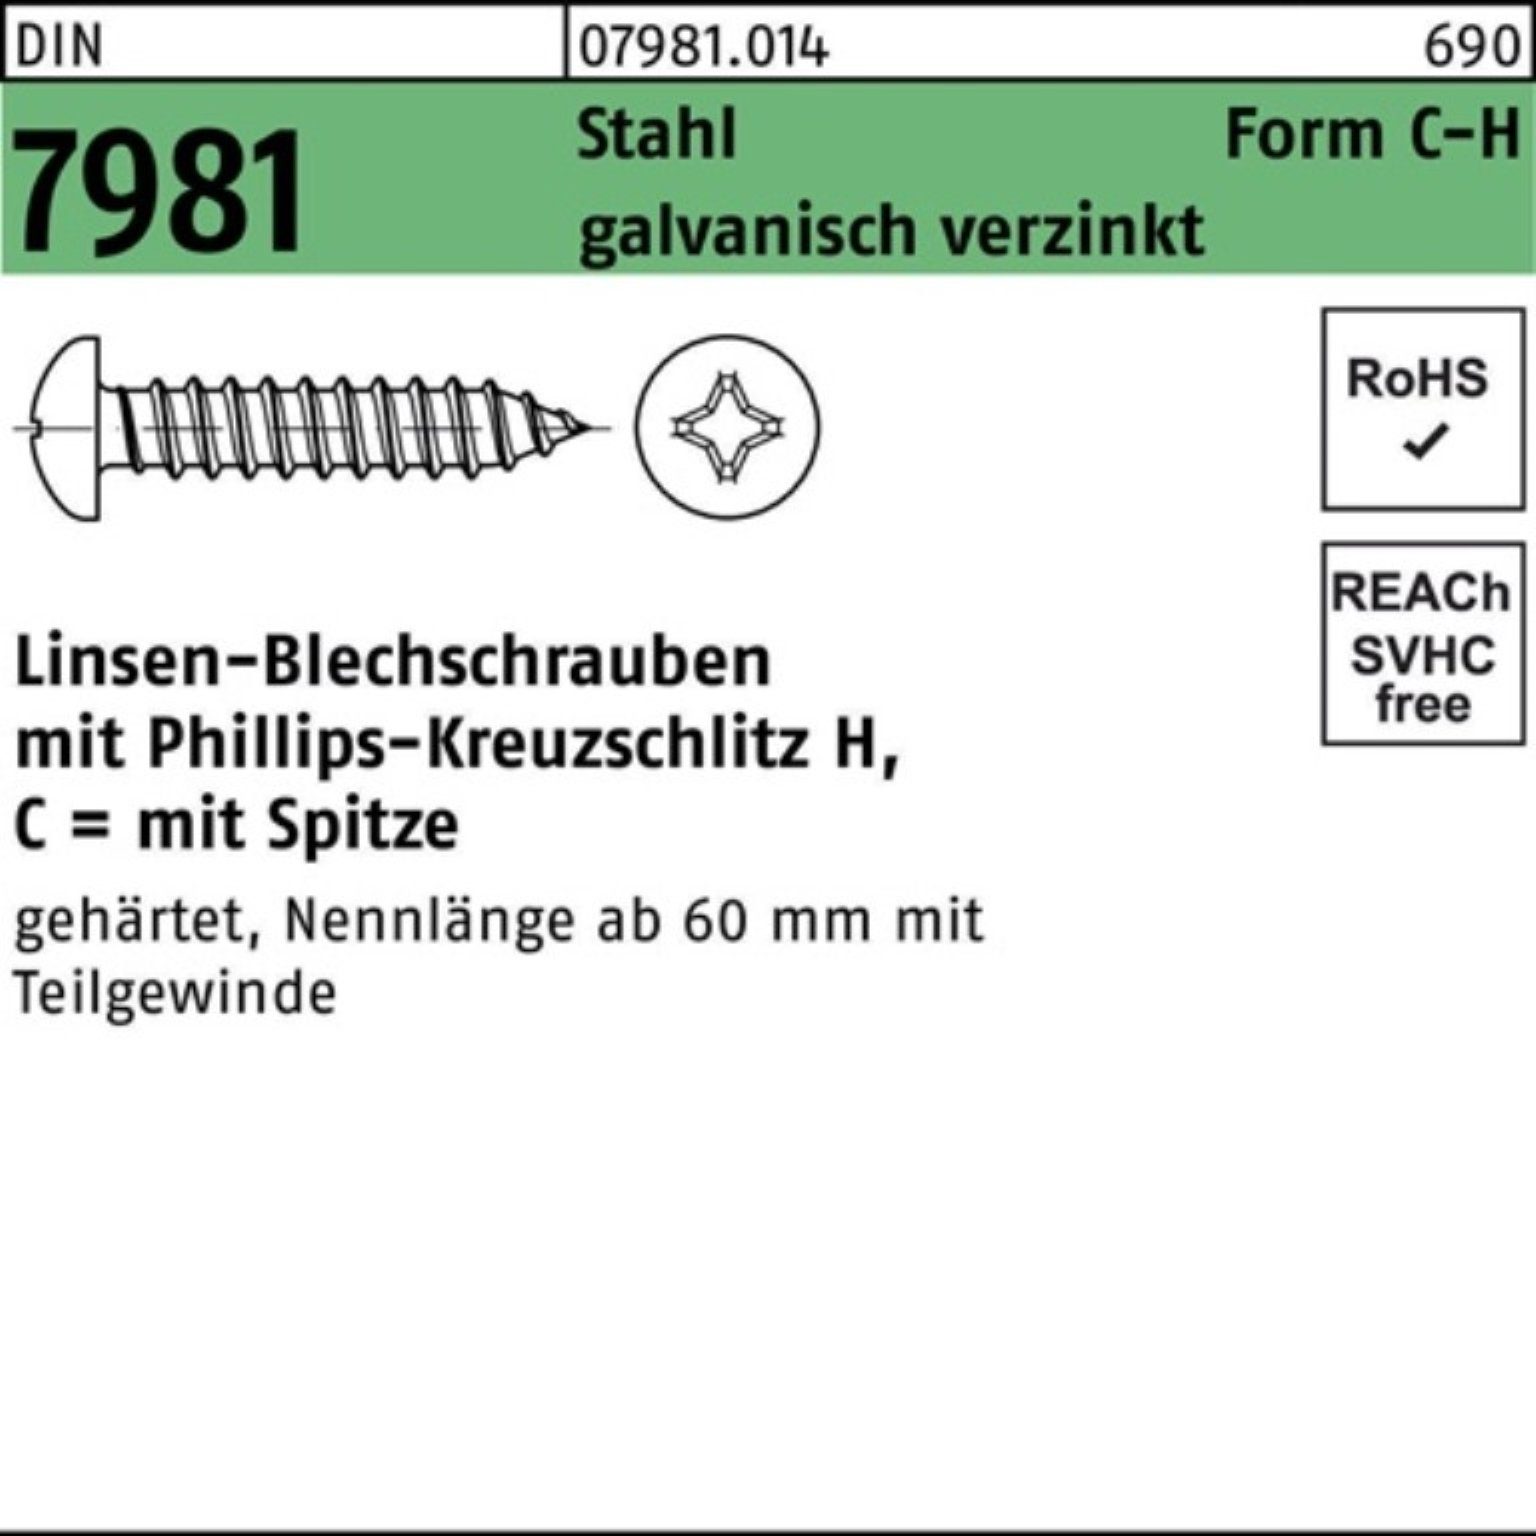 PH LIKO Blechschraube 7981 S Pack DIN C6,3x25-H galv.verz. Reyher Blechschraube Stahl 100er